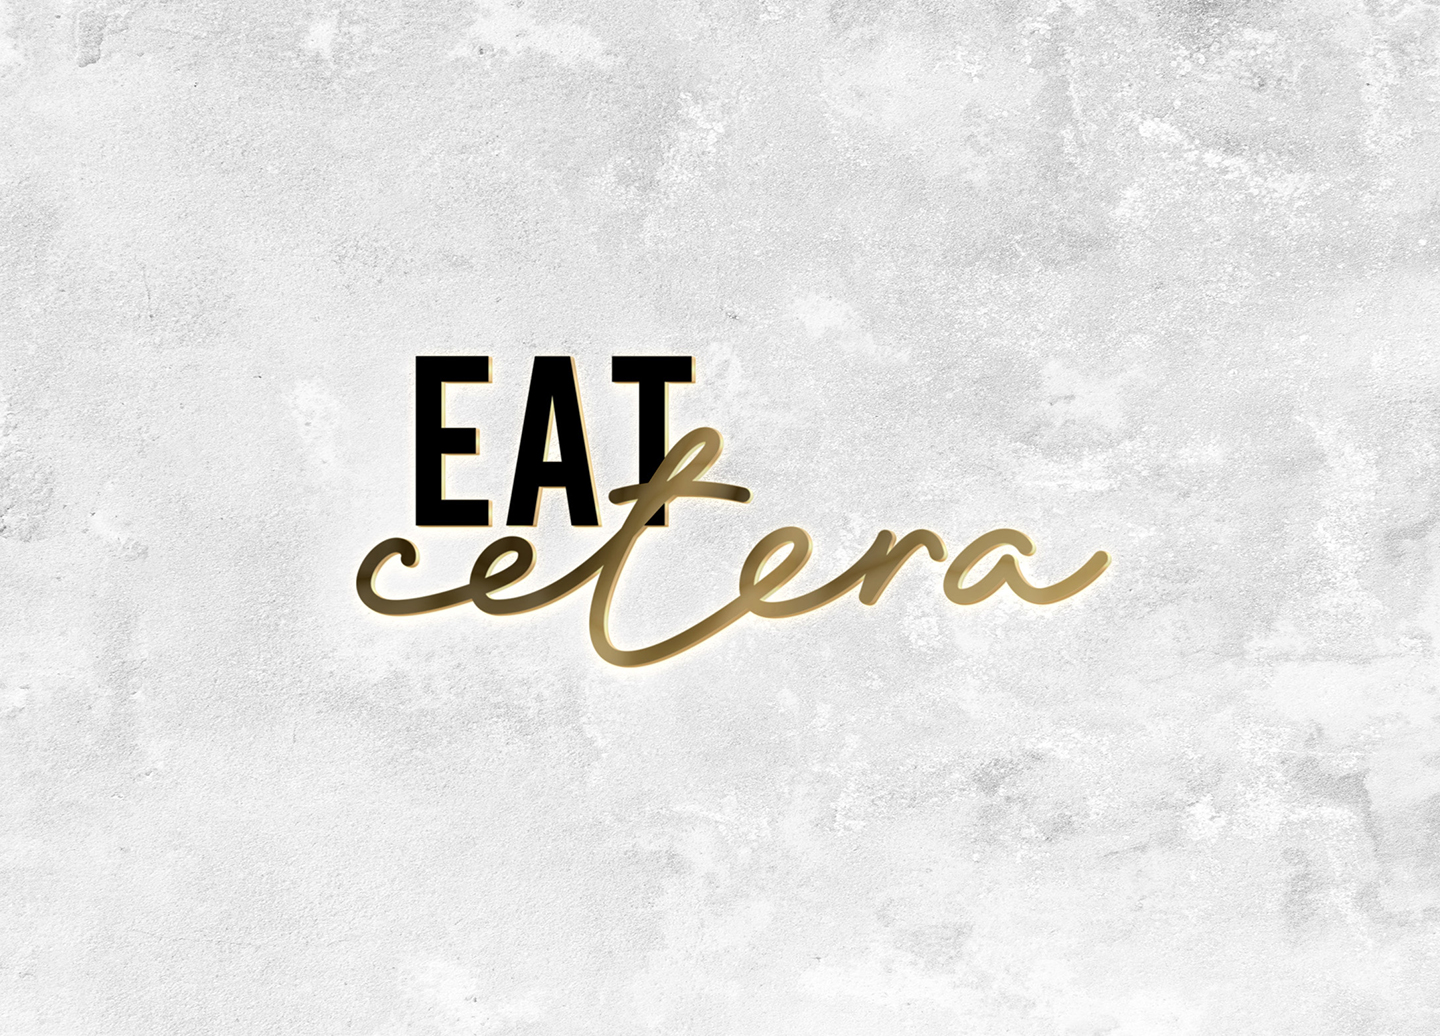 Eat Cetera-image-28440